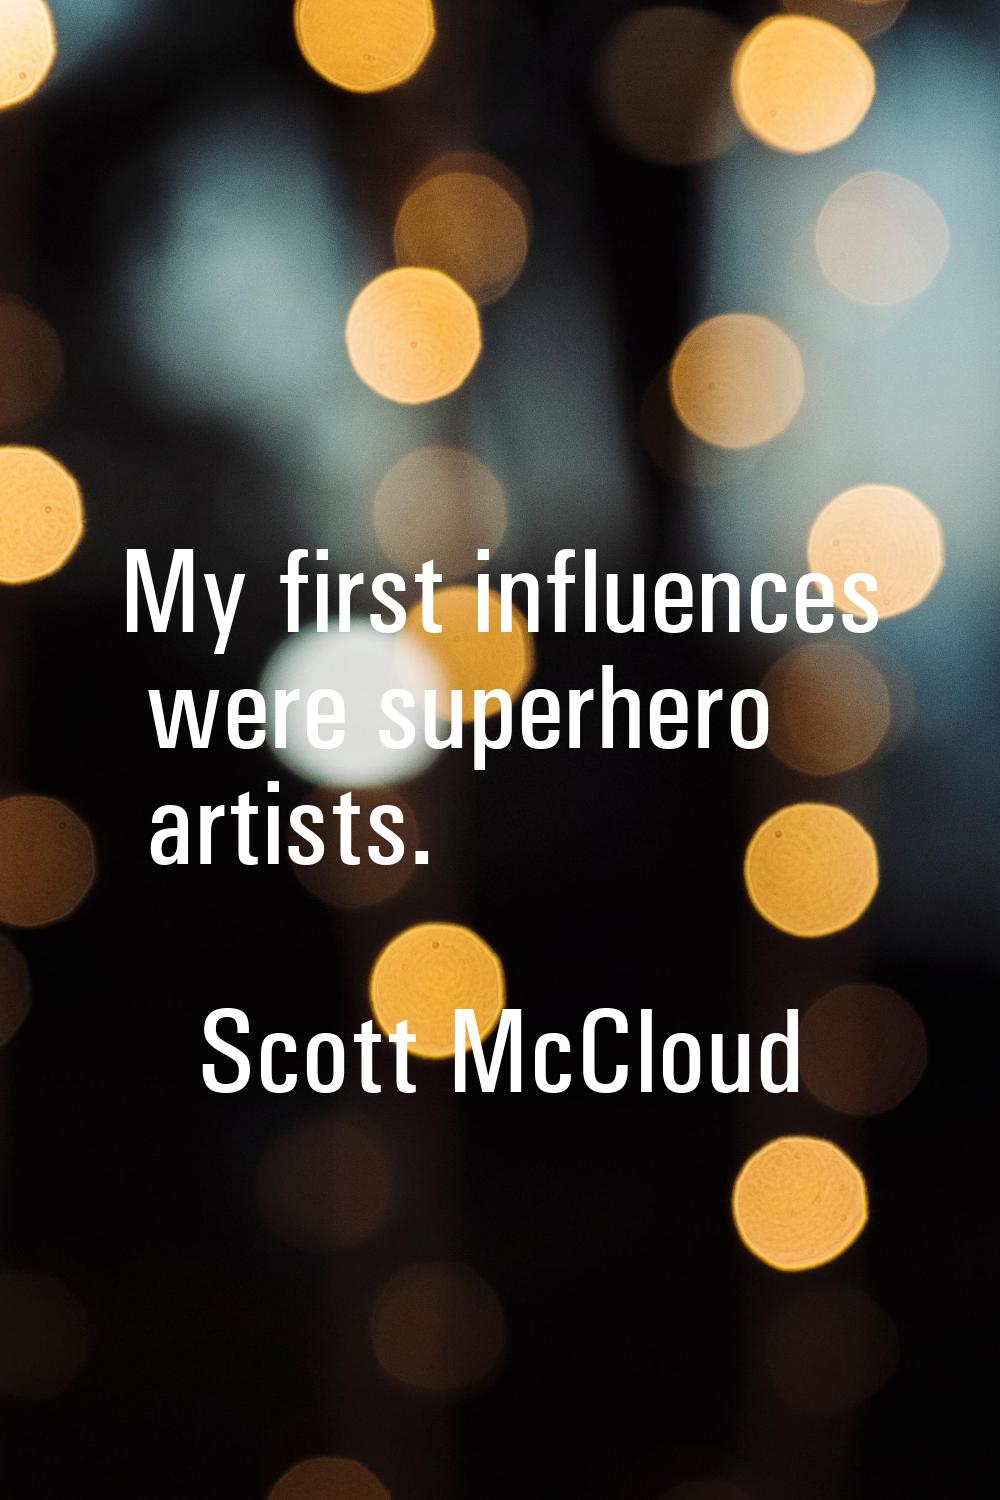 My first influences were superhero artists.